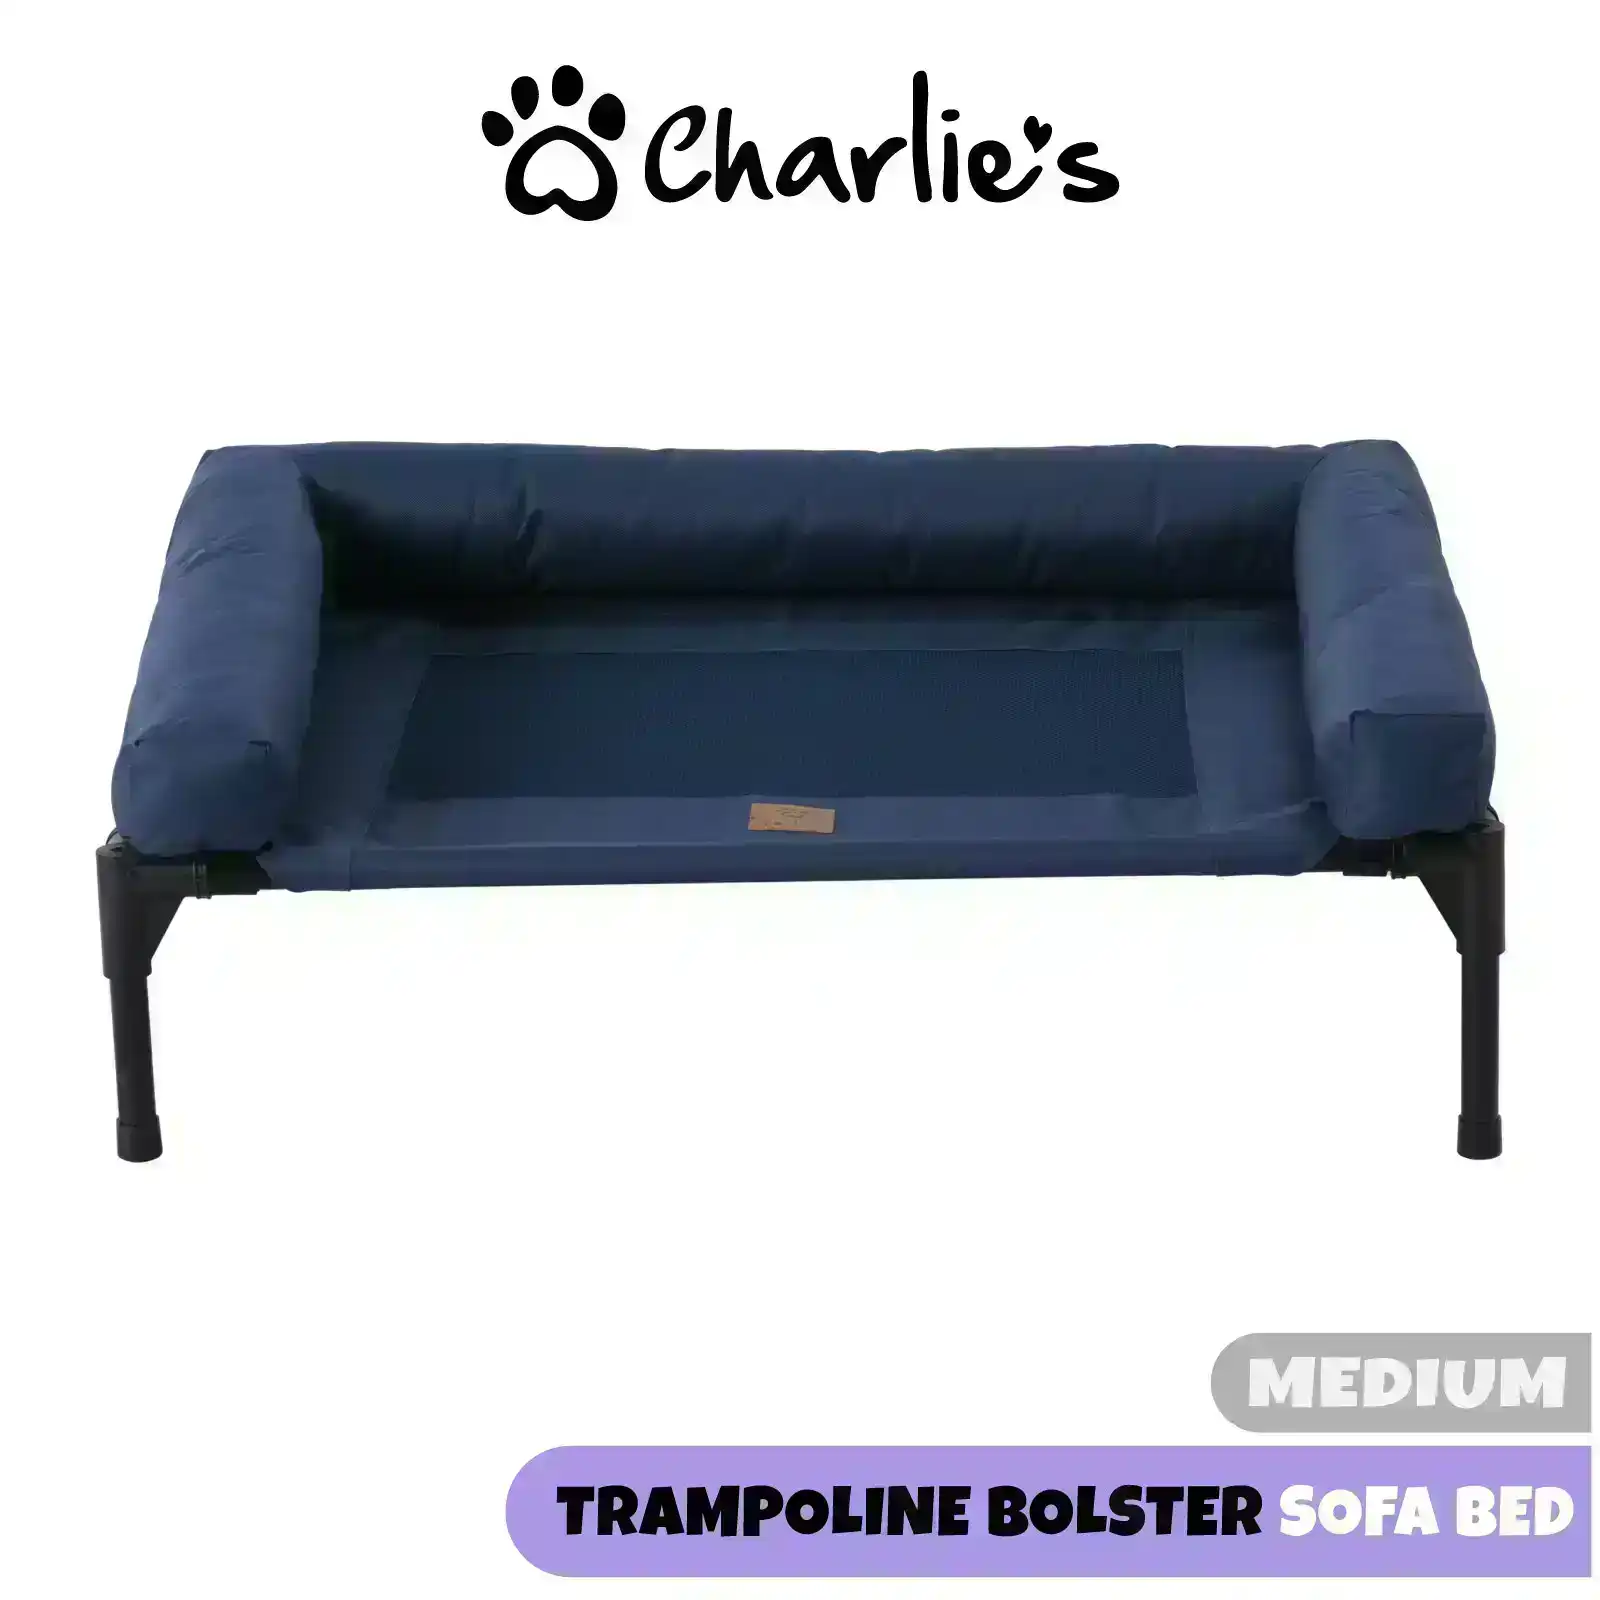 Charlie’s Pet Trampoline Bolster Sofa Bed Blue Medium 81.3 x 63.5 x 26.7cm